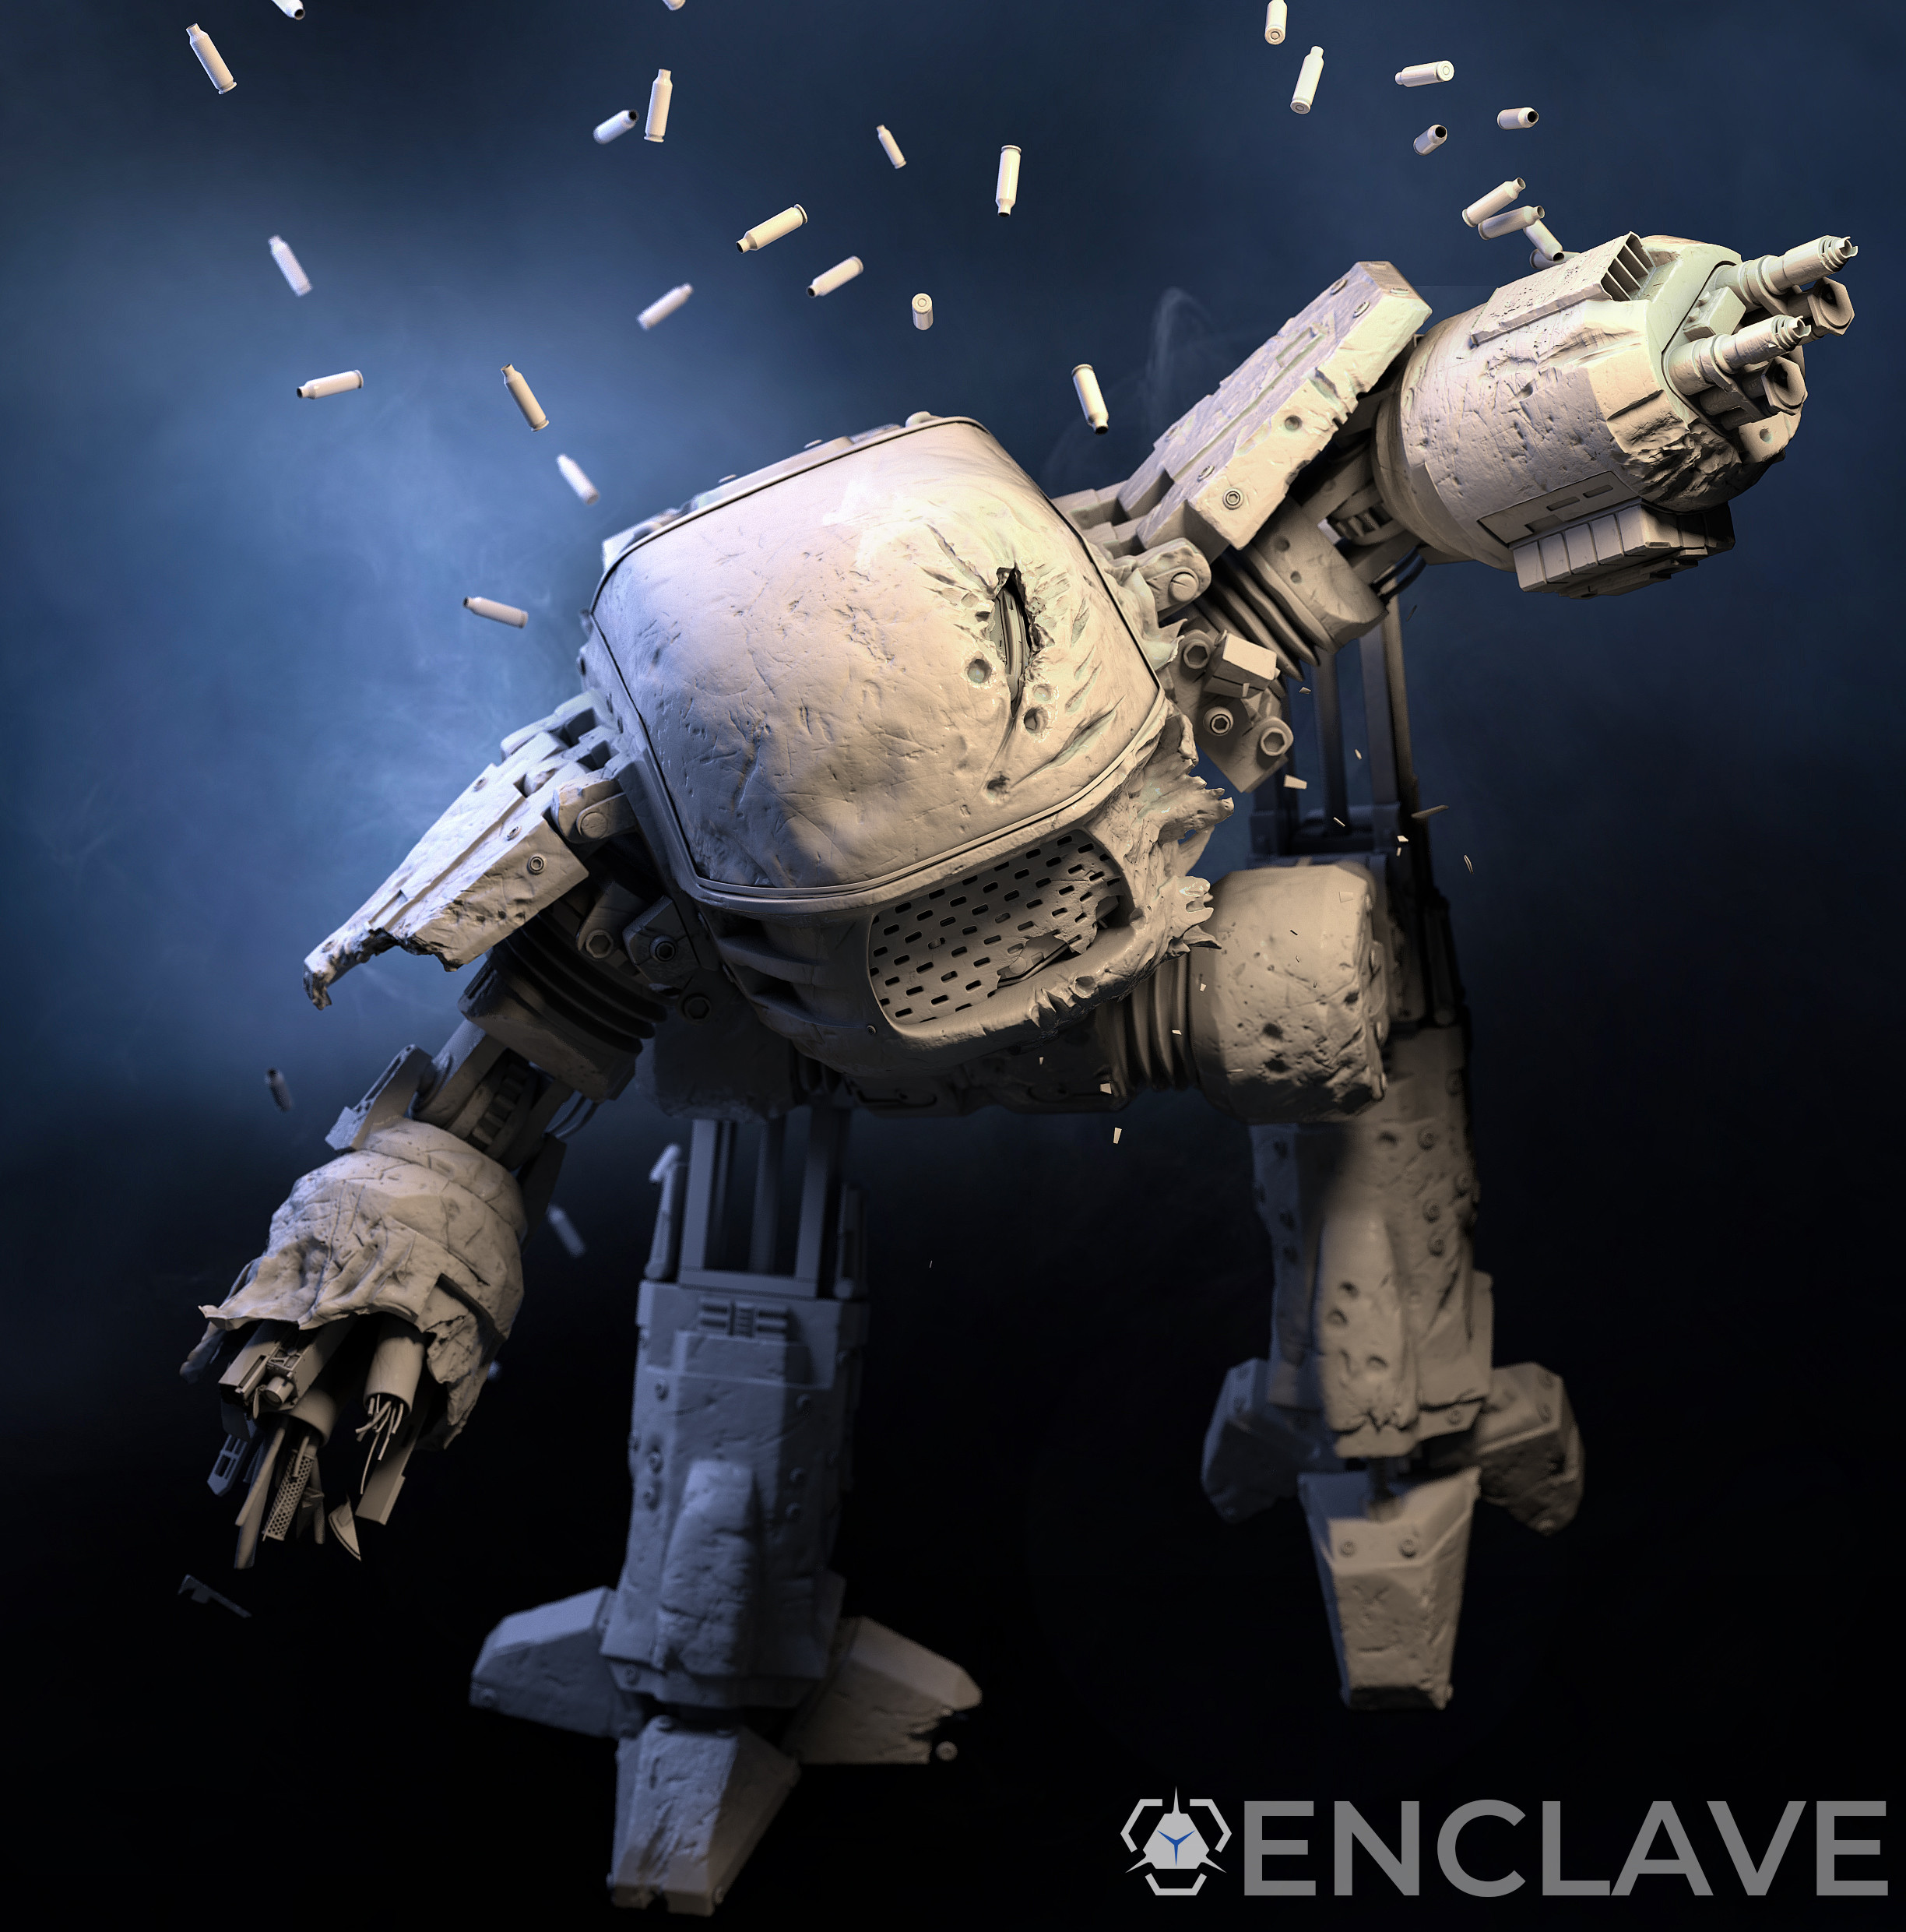 General 2448x2481 Enclave Interactive RoboCop ed-209 digital art machine movies fan art